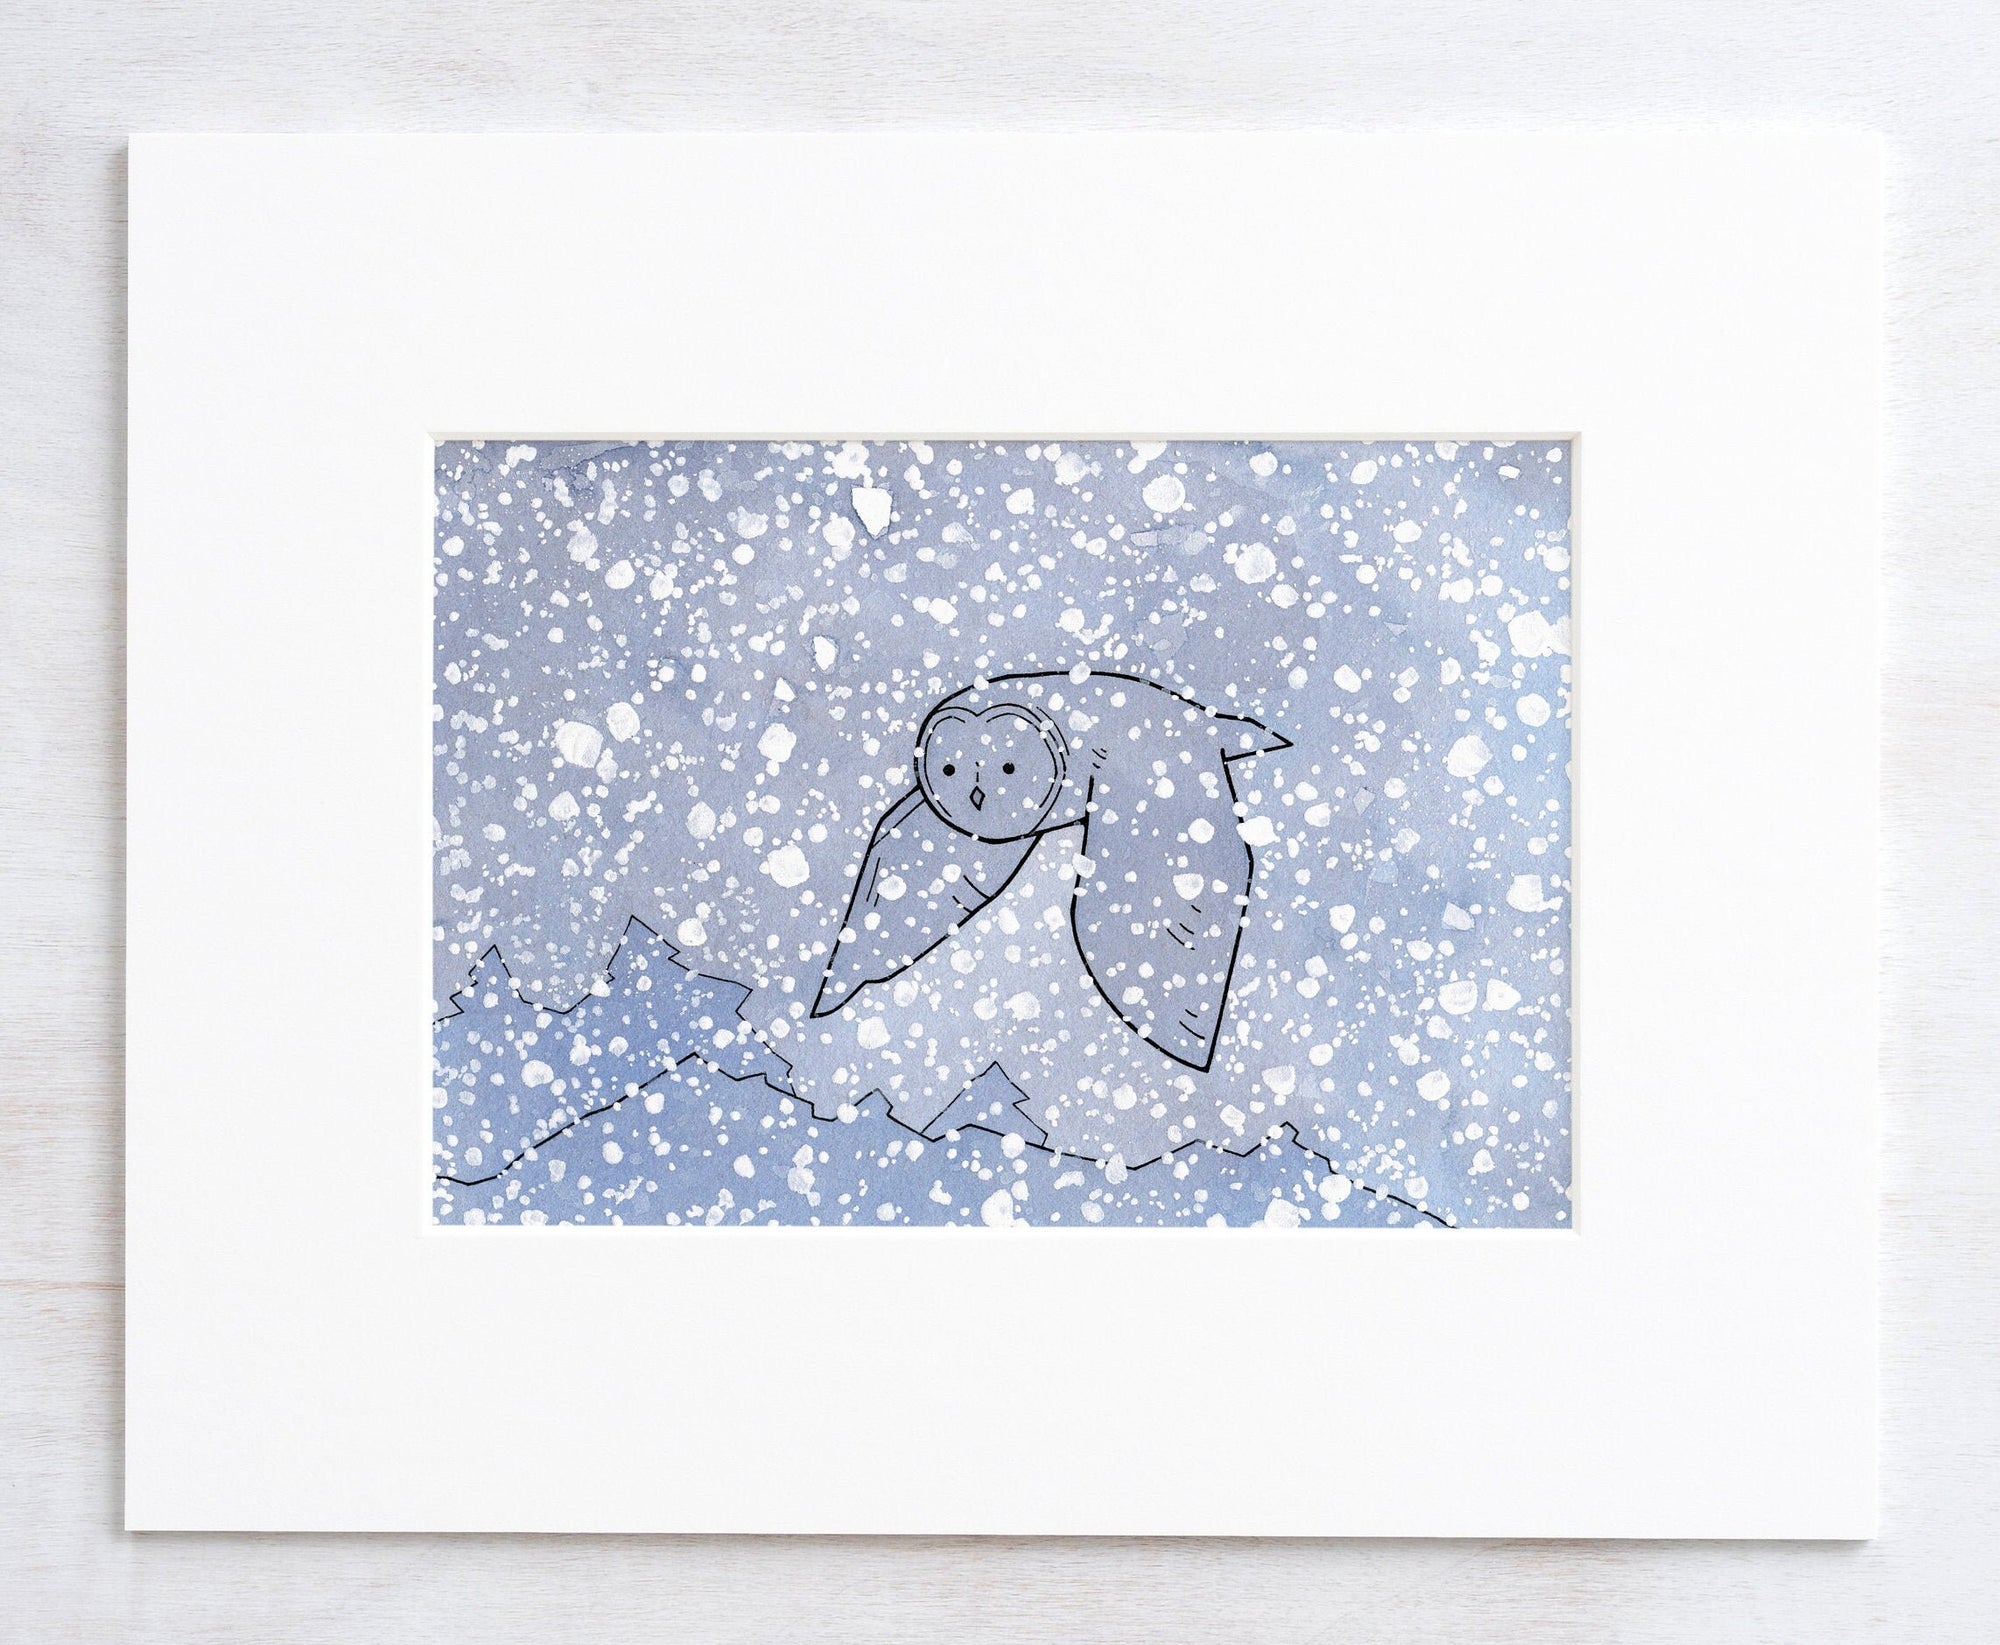 Great Gray Owl in Snow Art Print, Whimsical Animal Art Painting, Kids Room